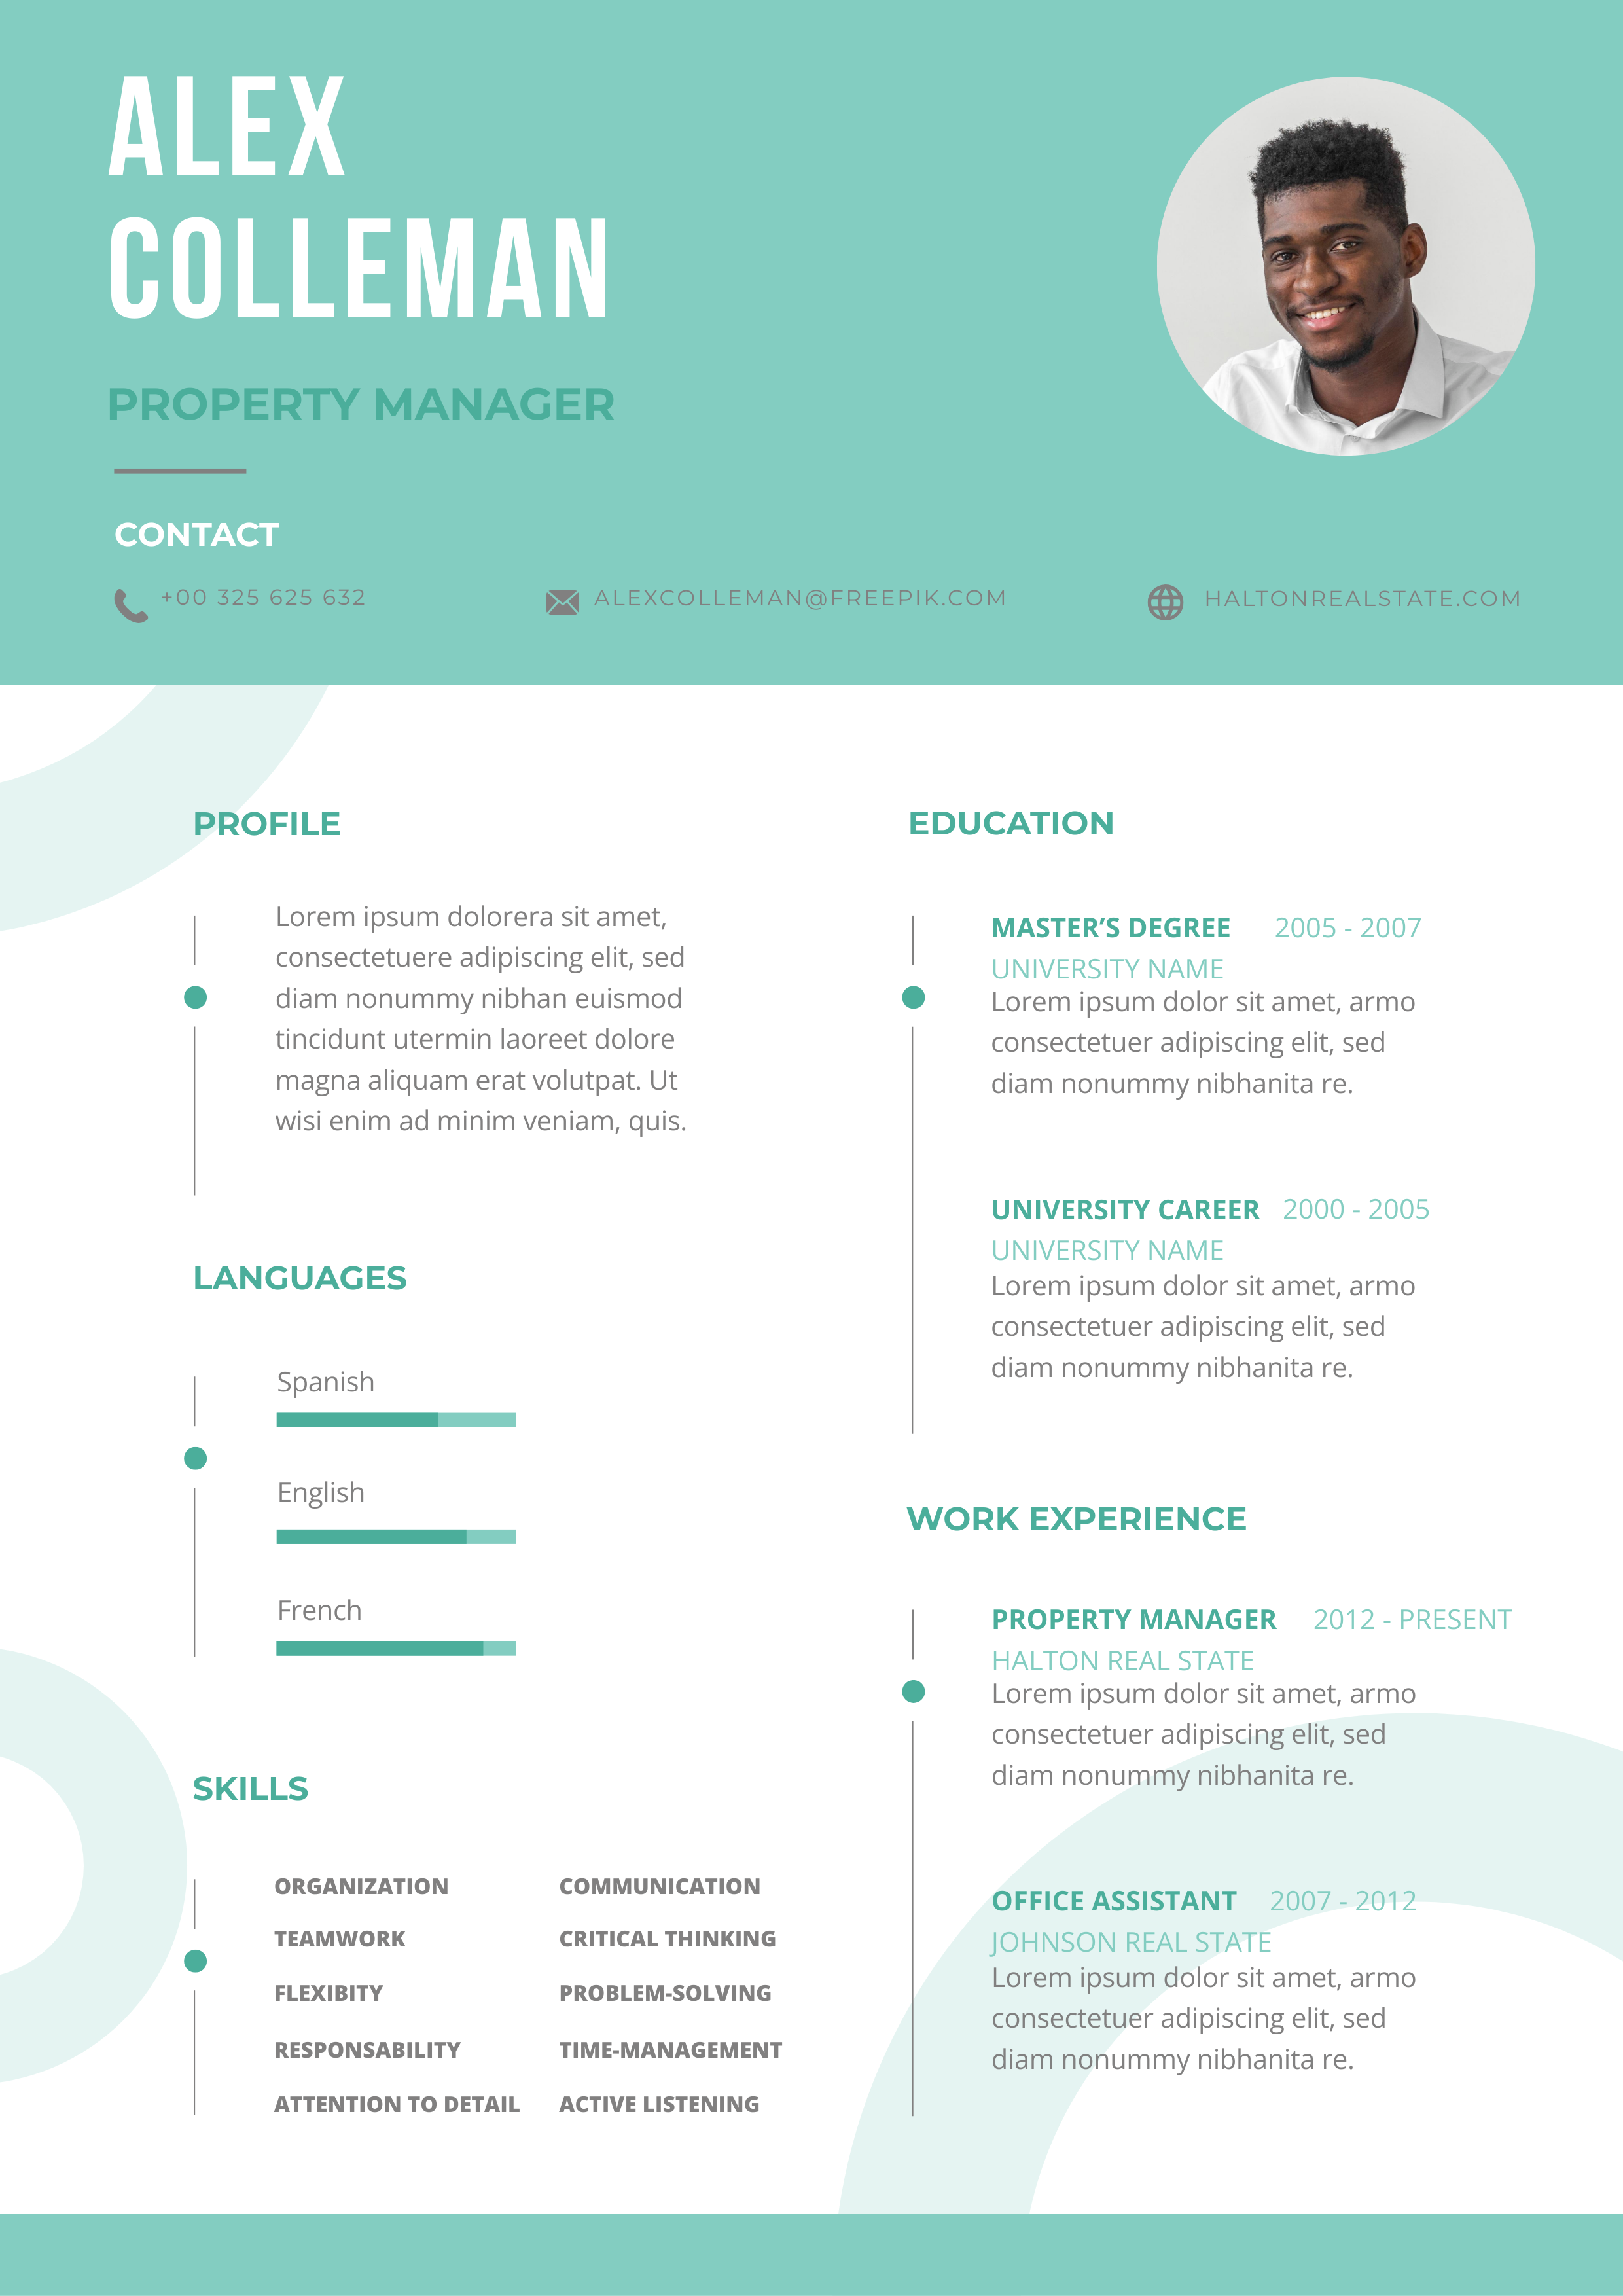 professional-monocolor-alex-real-estate-resume